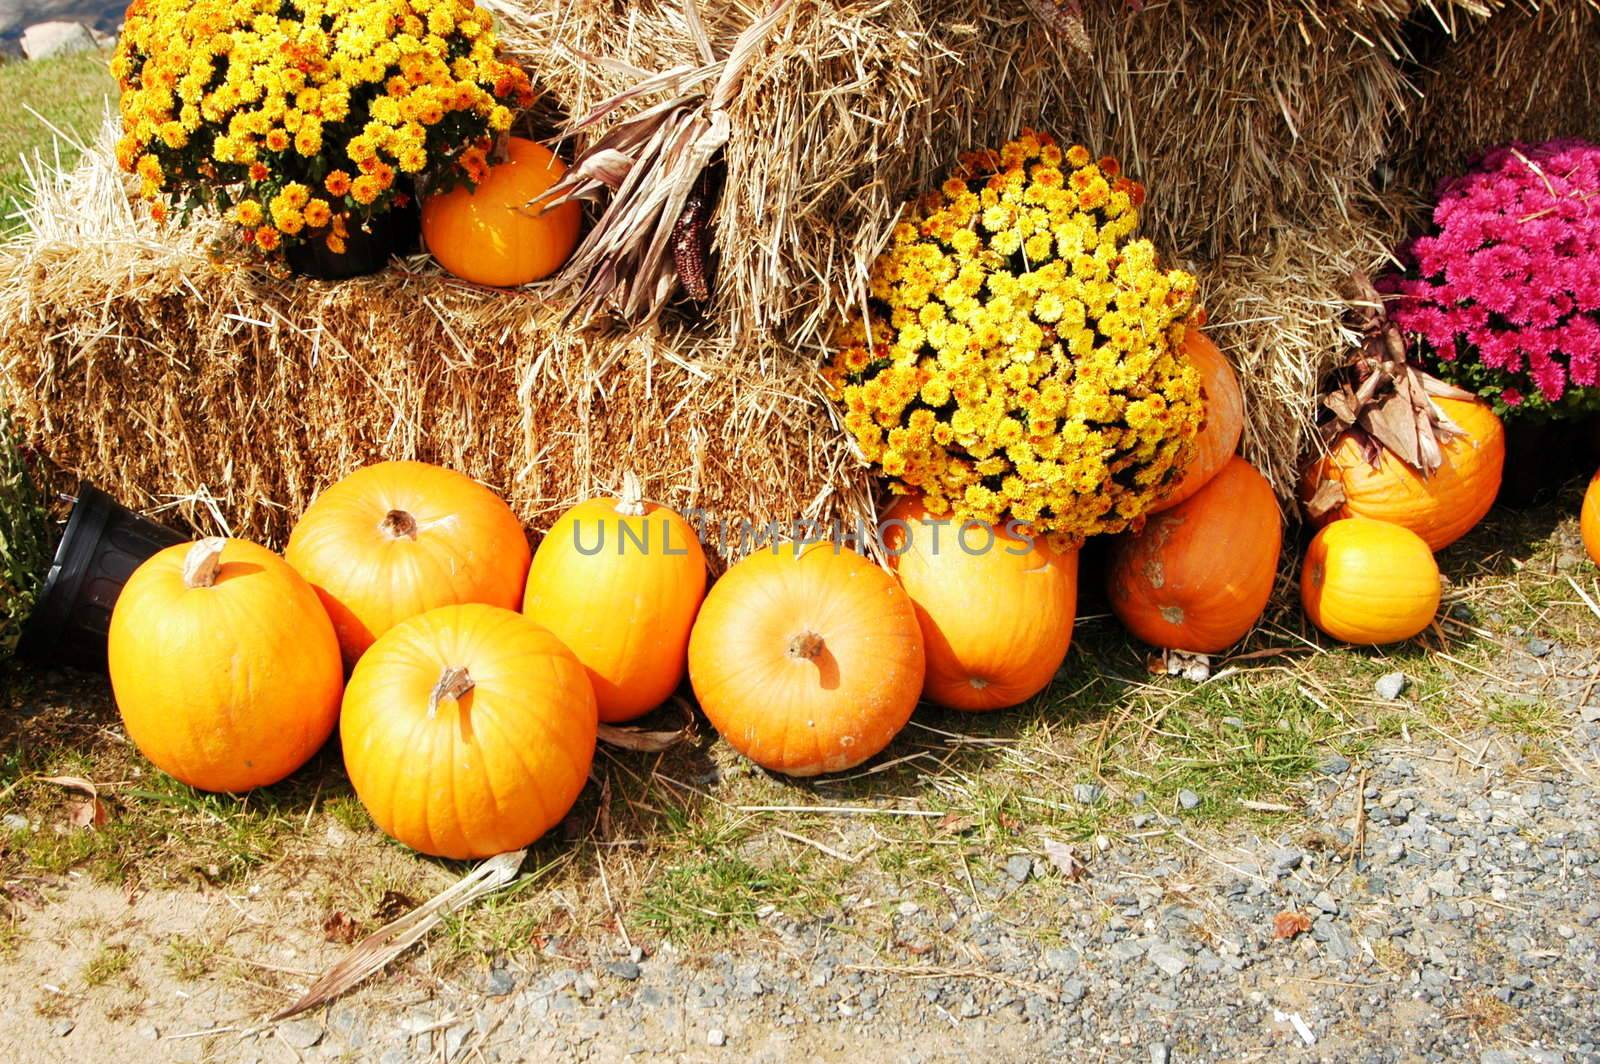 Fall harvest scene by northwoodsphoto